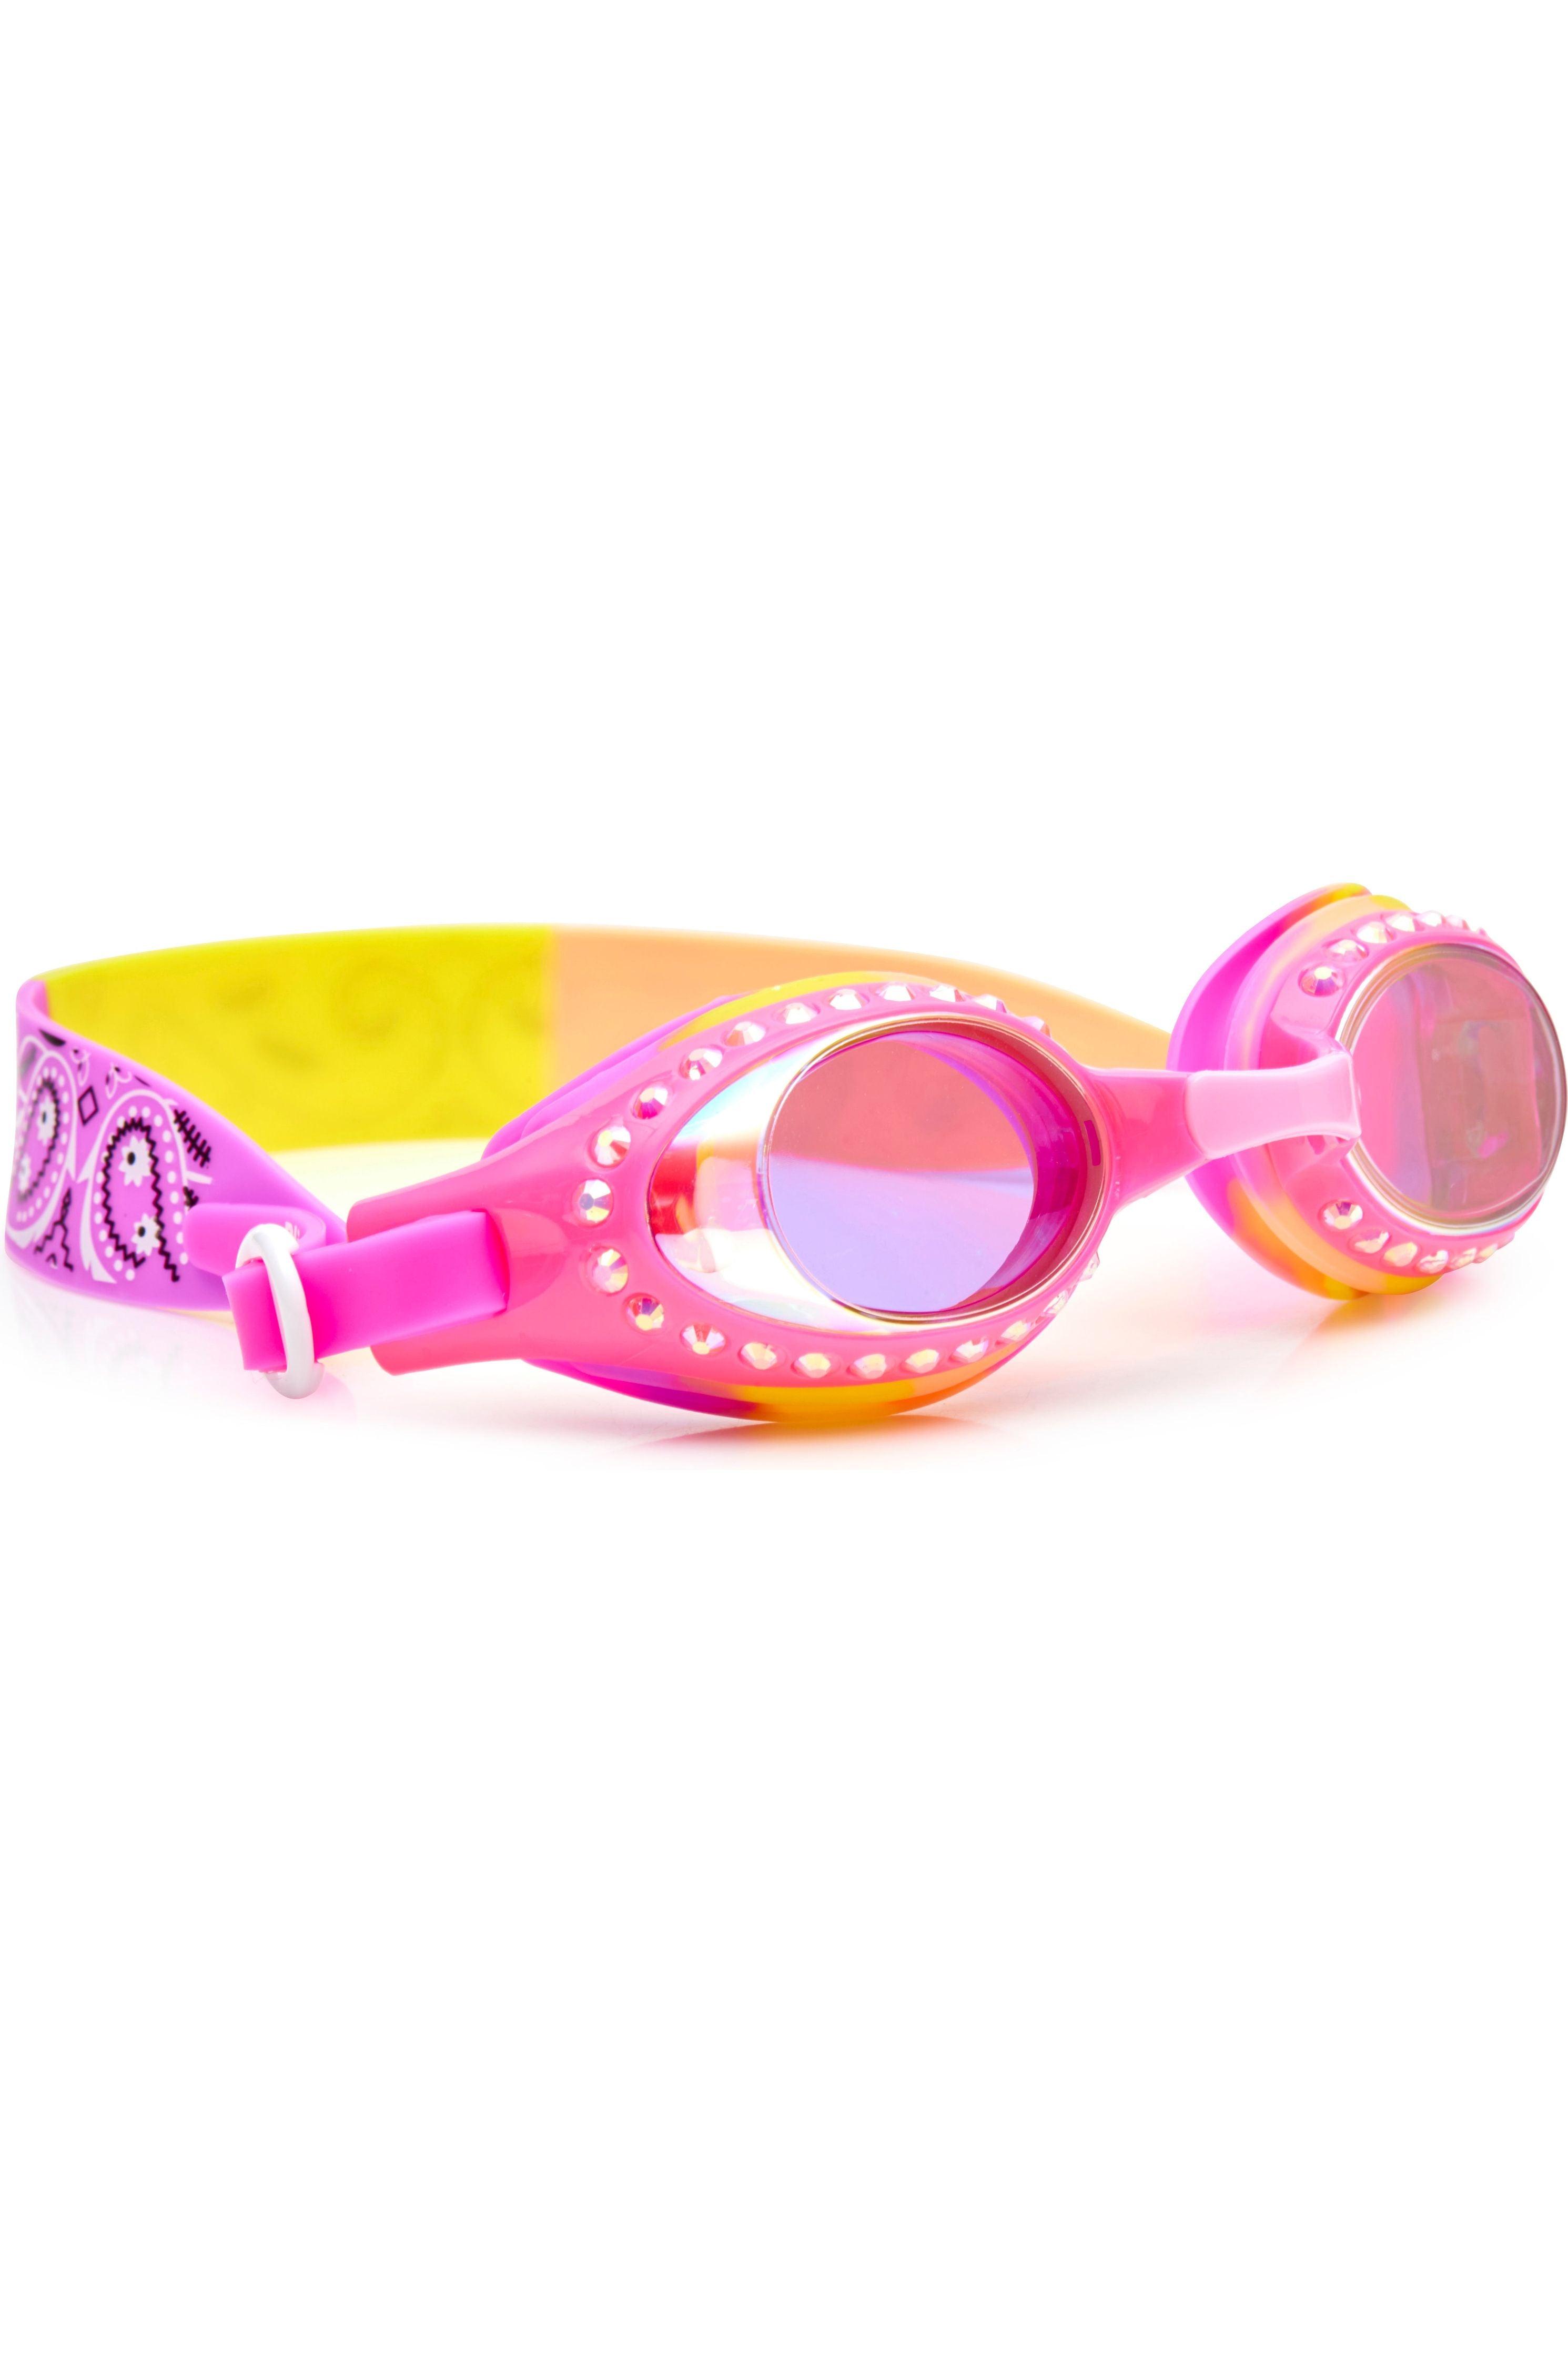 Bling20 Swim Goggles - Bandana - Prachie Pink